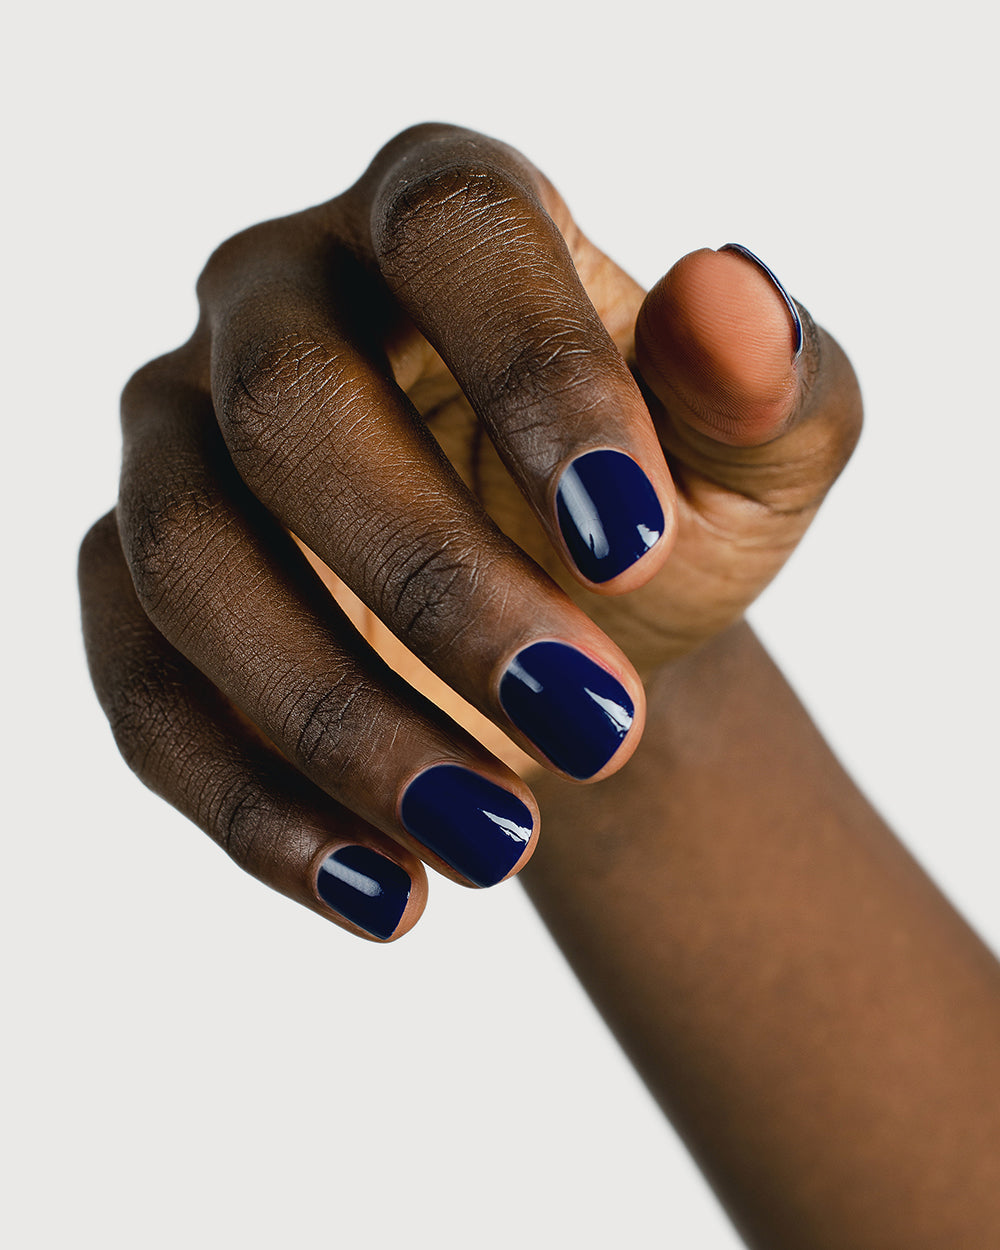 Classic navy blue nail polish hand swatch on dark skin tone